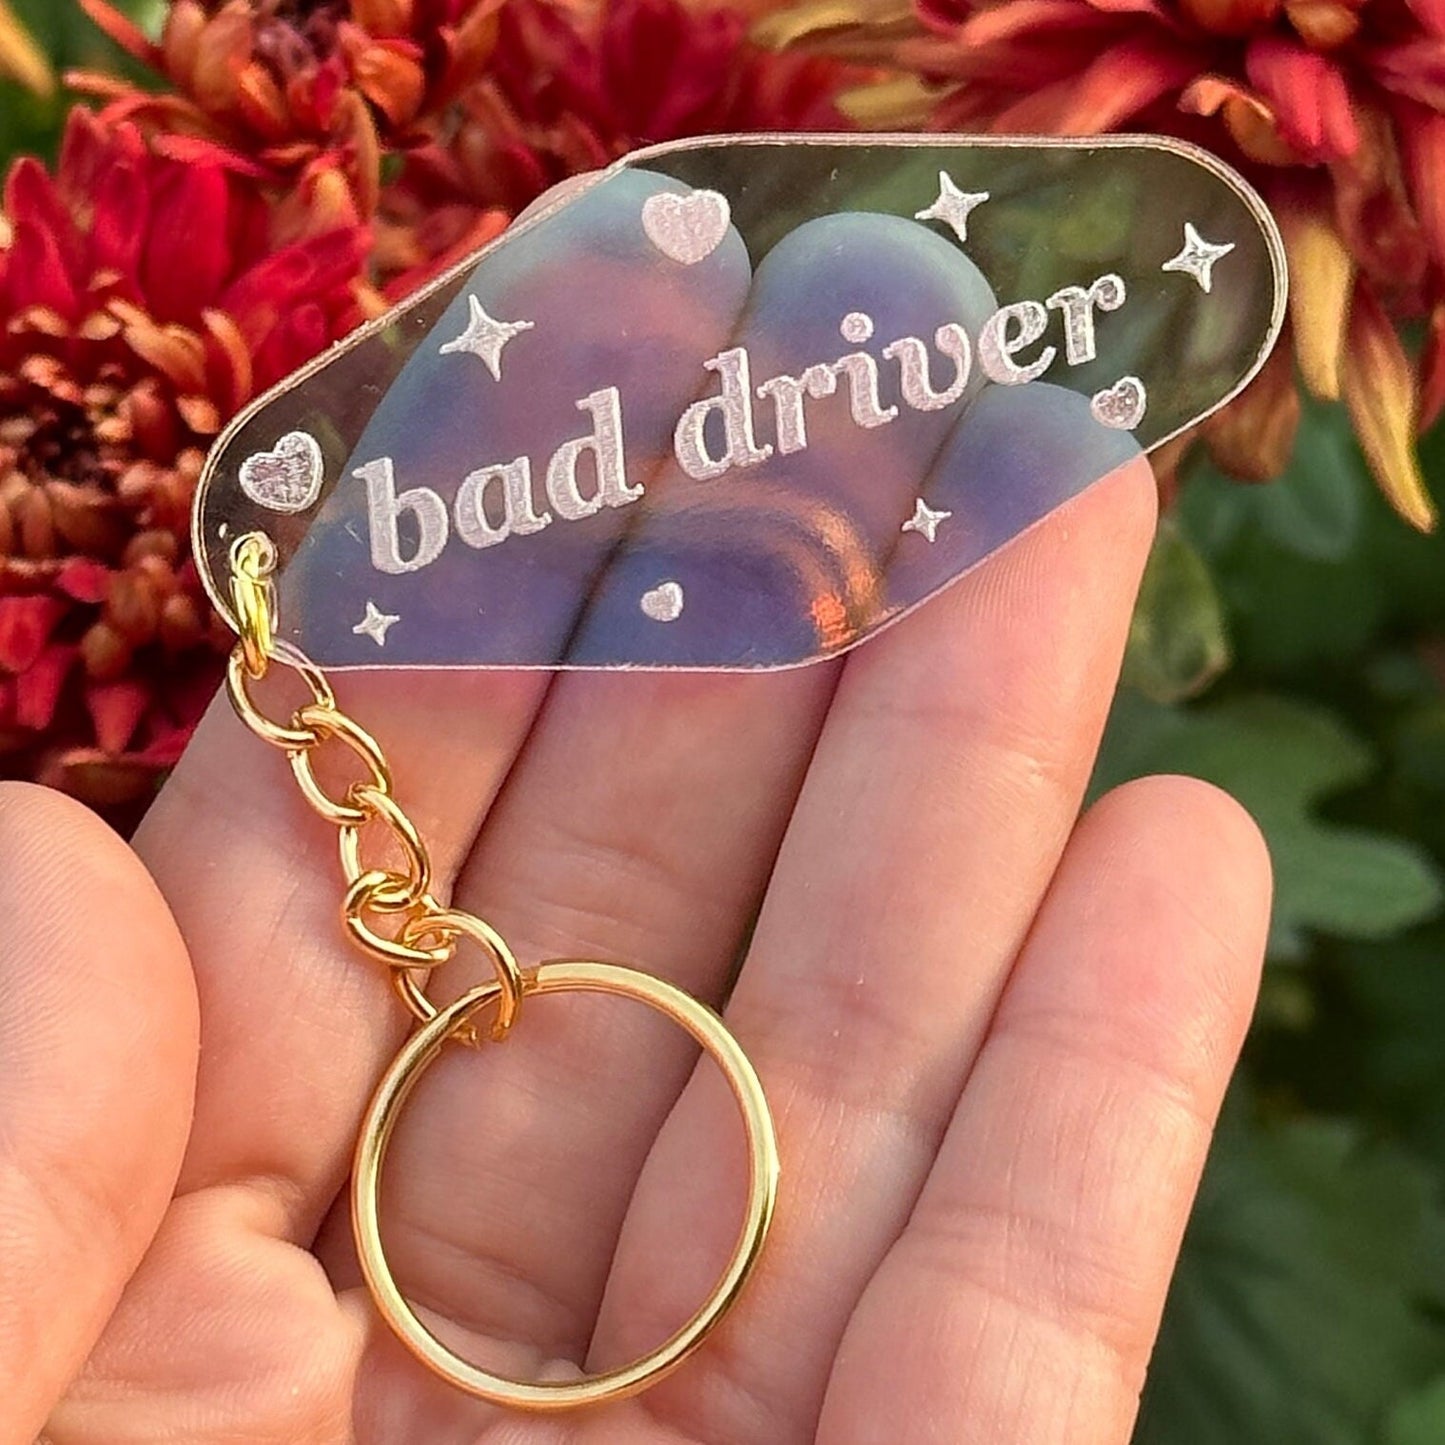 Bad Driver Iridescent Acrylic Motel Keychain